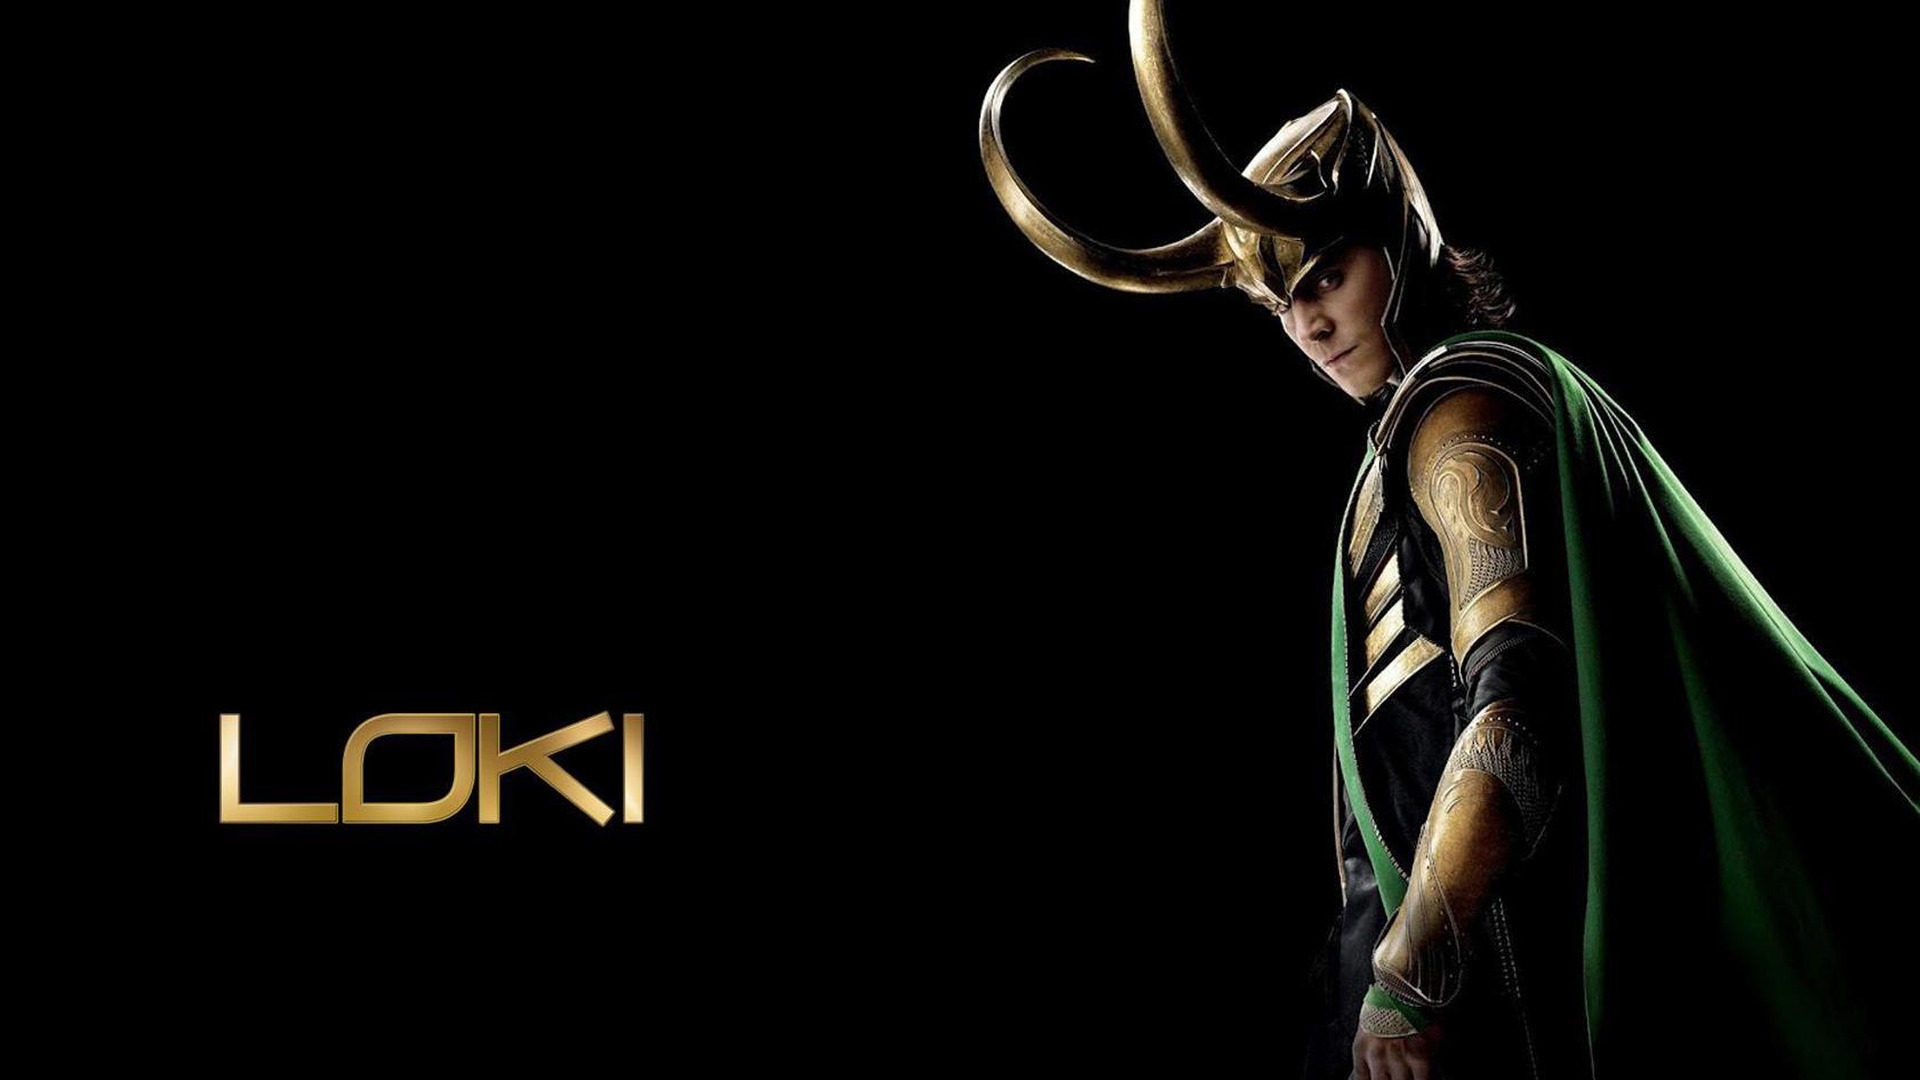 Loki for 1920 x 1080 HDTV 1080p resolution